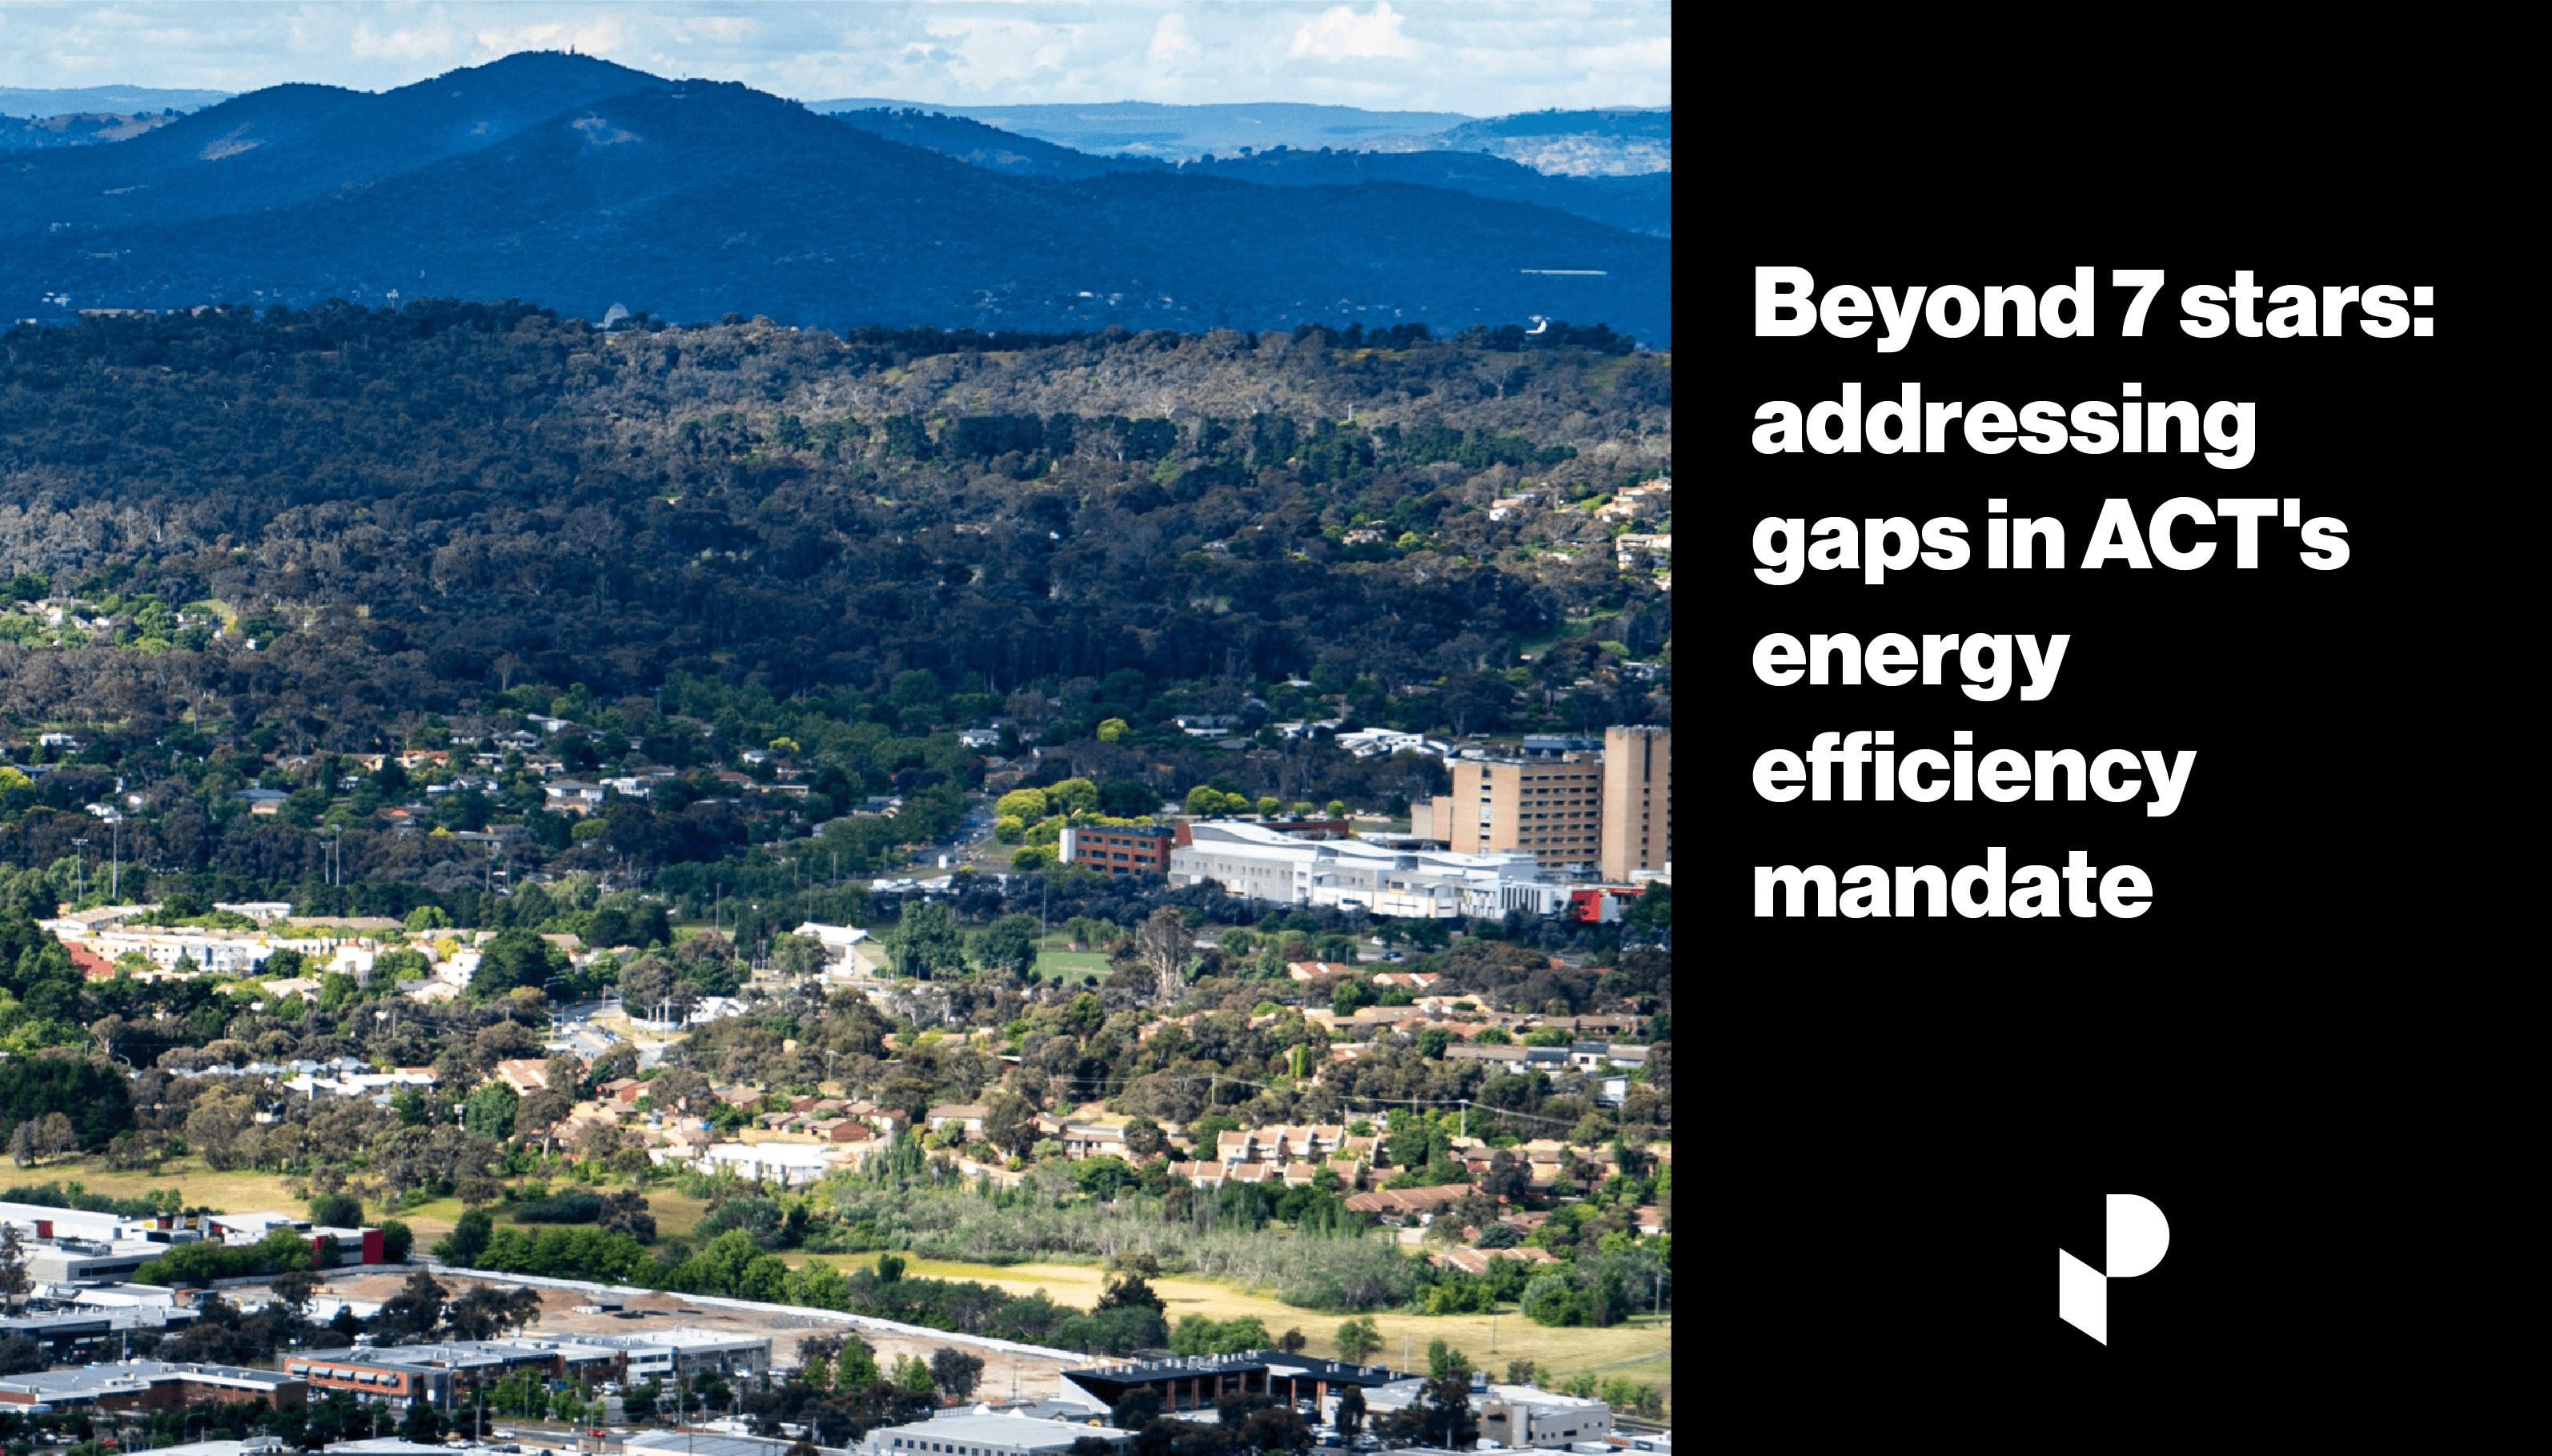 Media Release: Beyond 7 stars: addressing gaps in ACT’s energy efficiency mandate